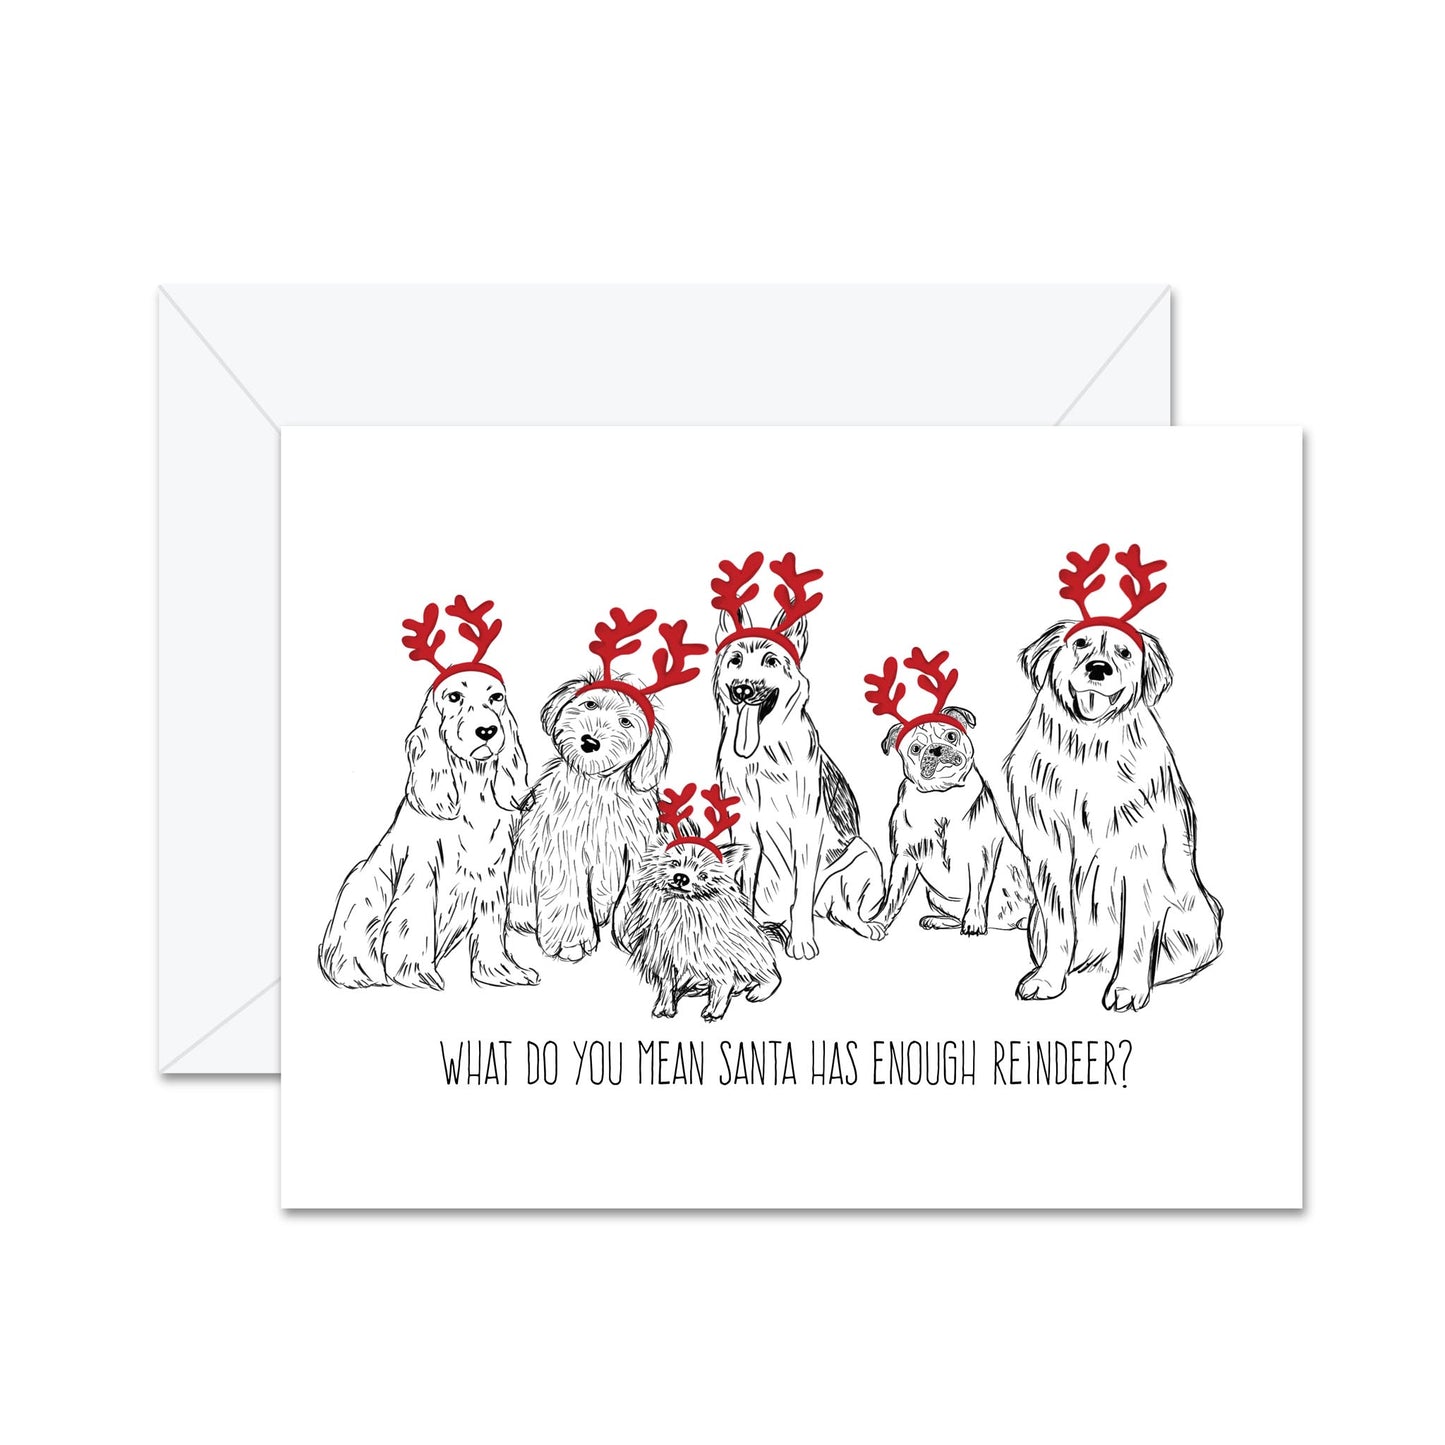 What Do You Mean Santa Has Enough Reindeer? - Greeting Card